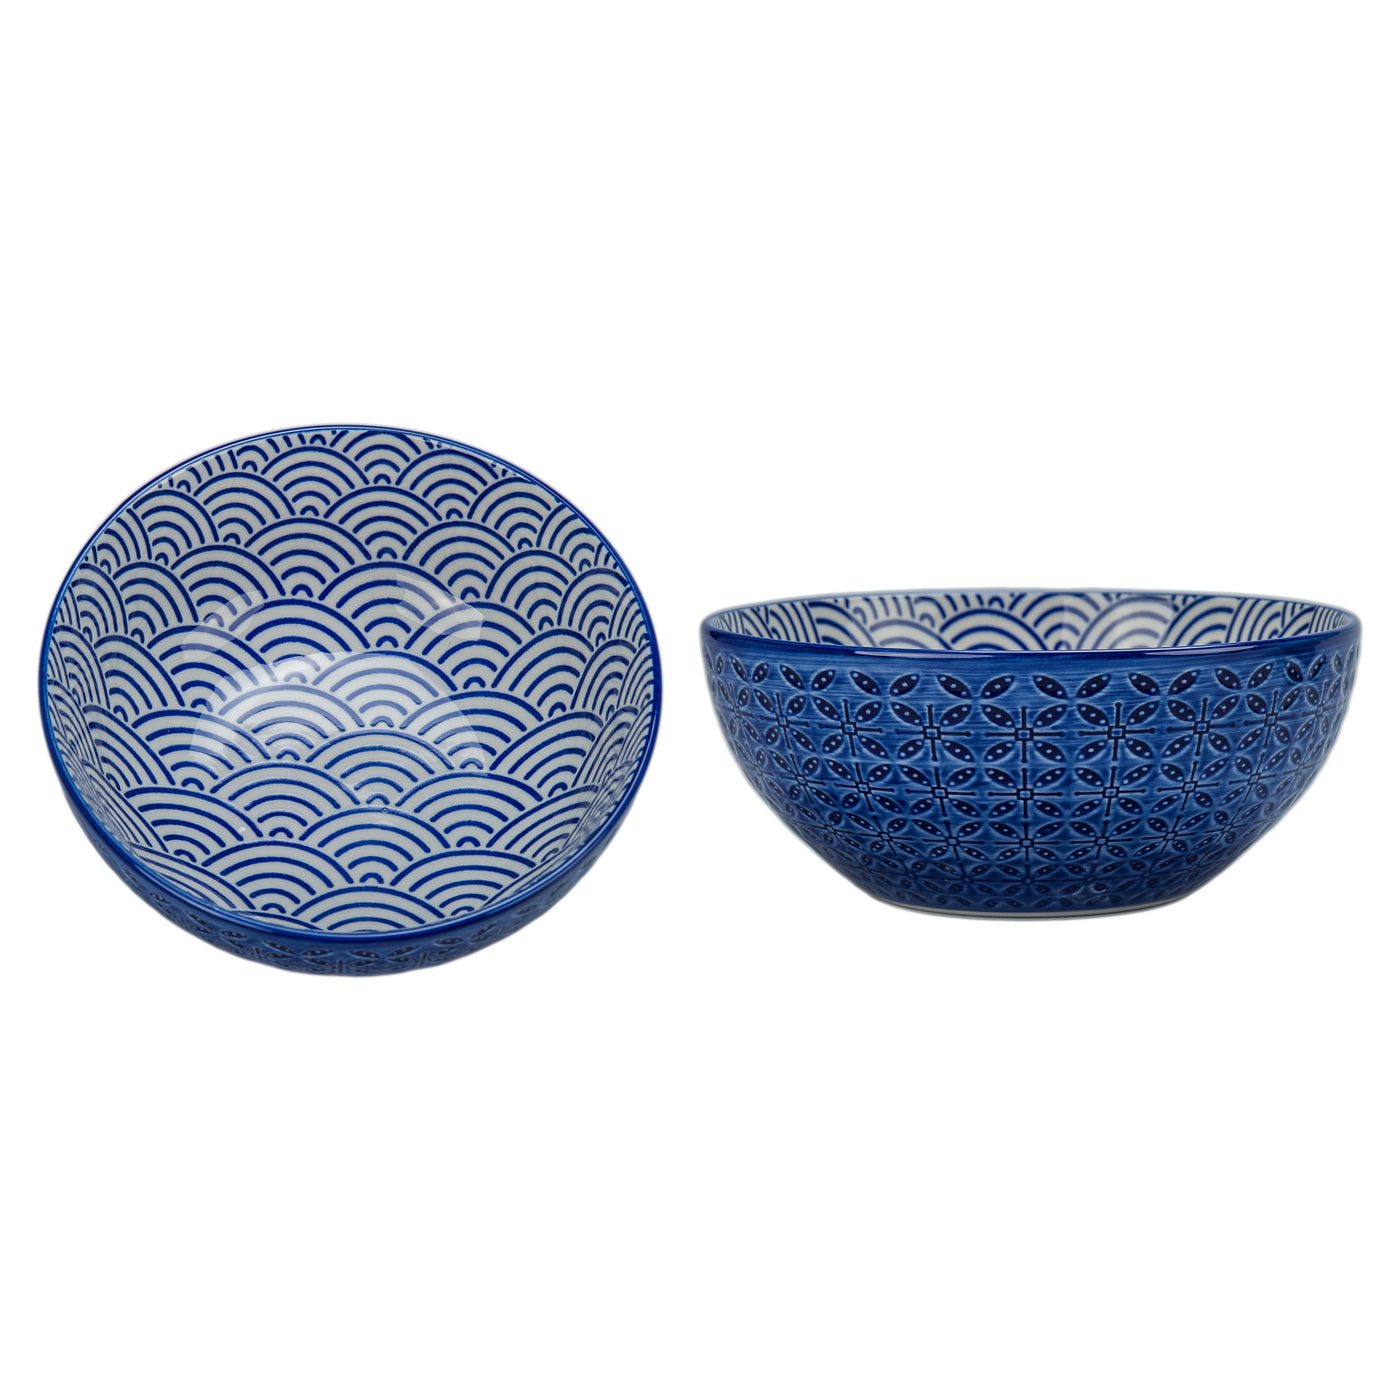 Bowl Redondo Diseños (Azul) Mediano De Porcelana